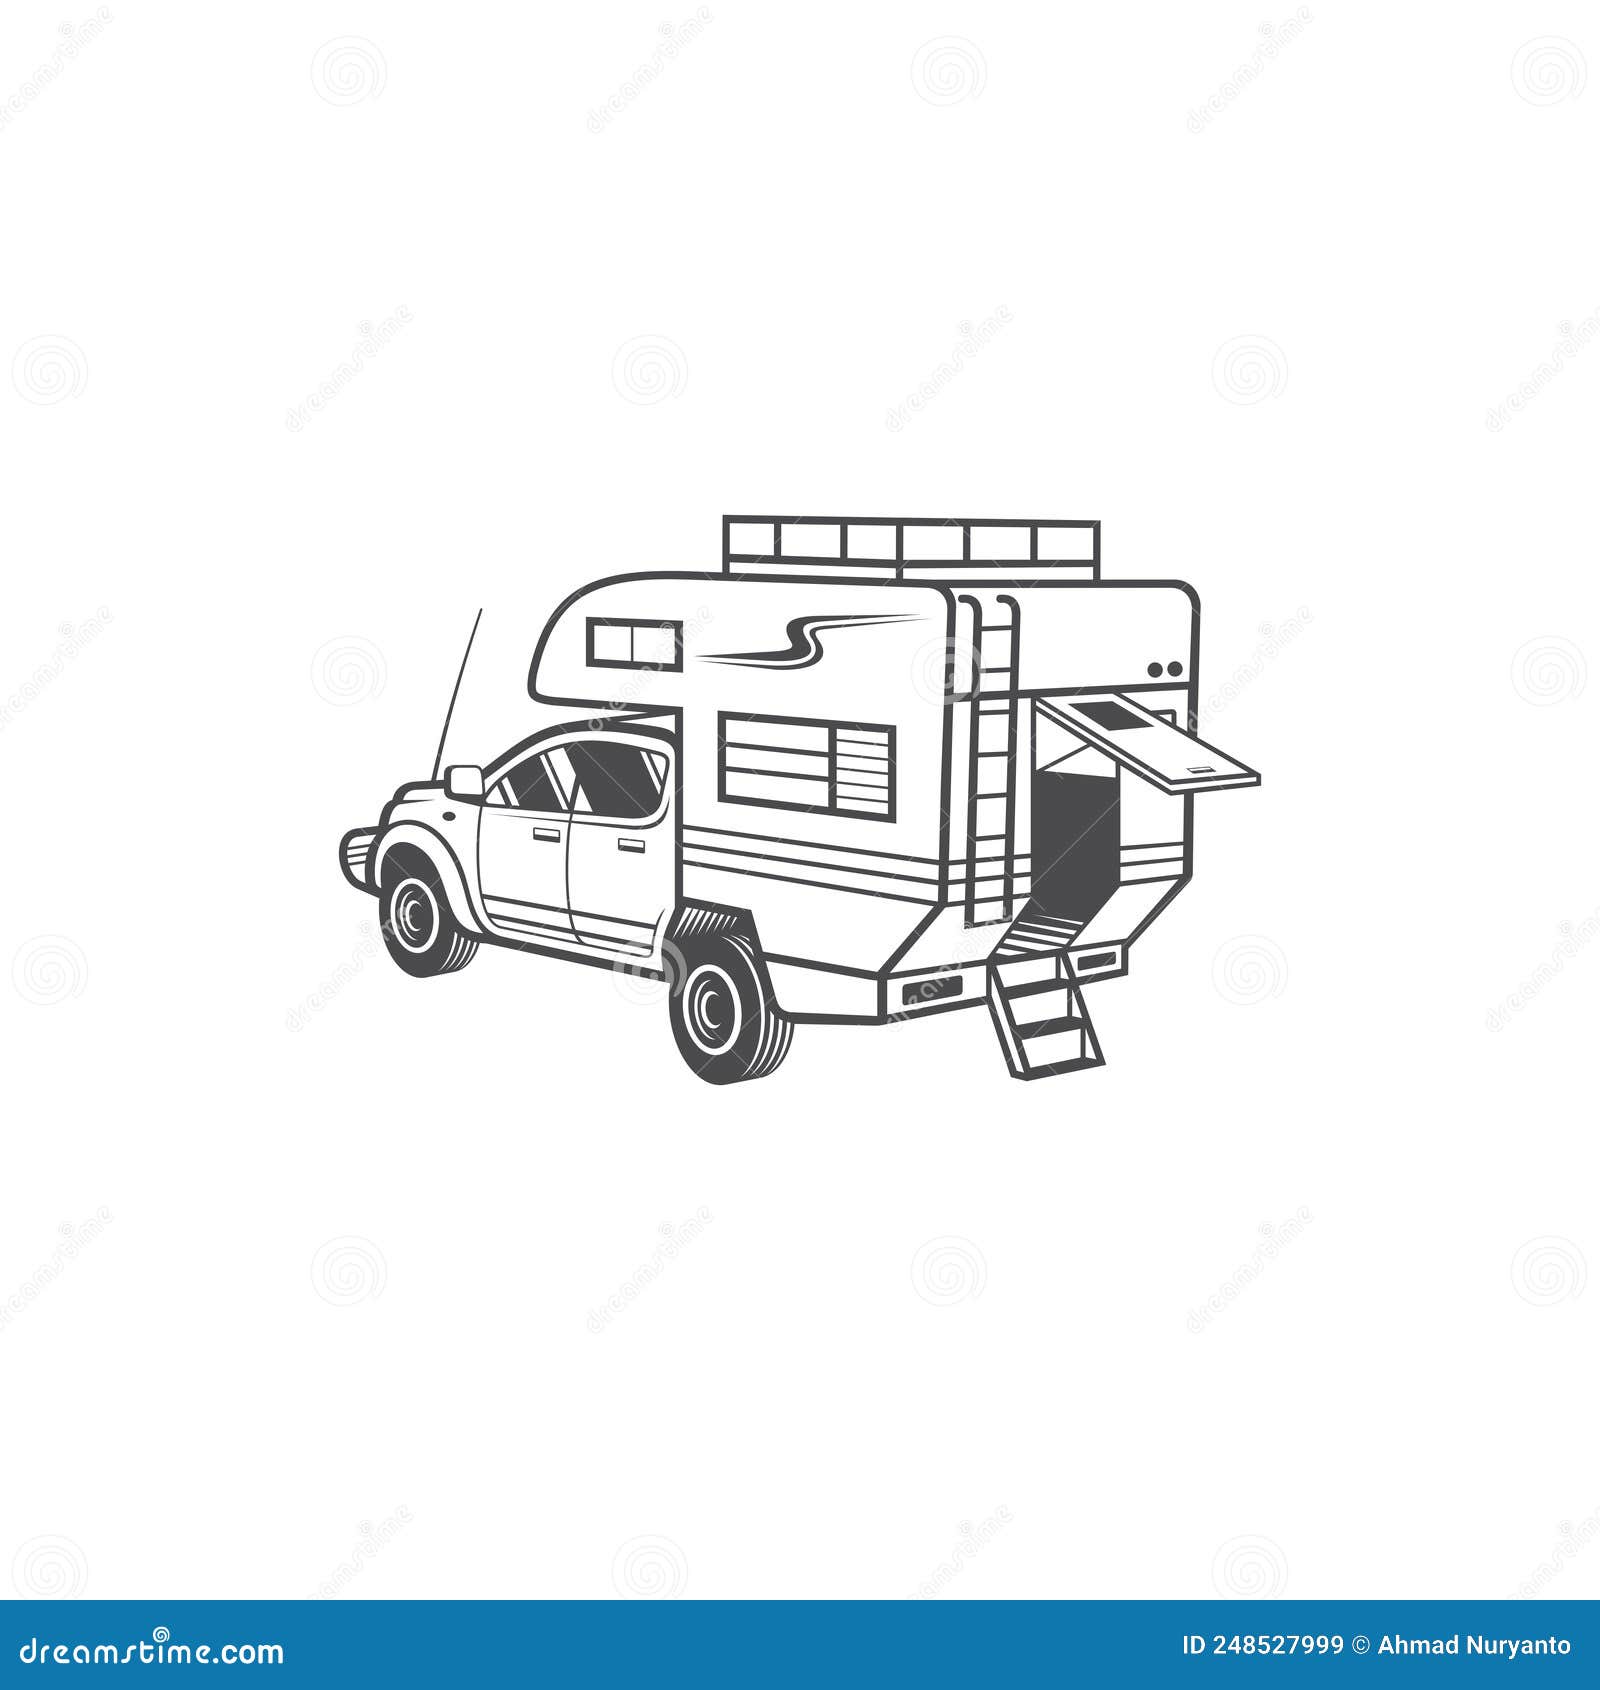 Interesting Illustration of Camper Truck Stock Illustration ...